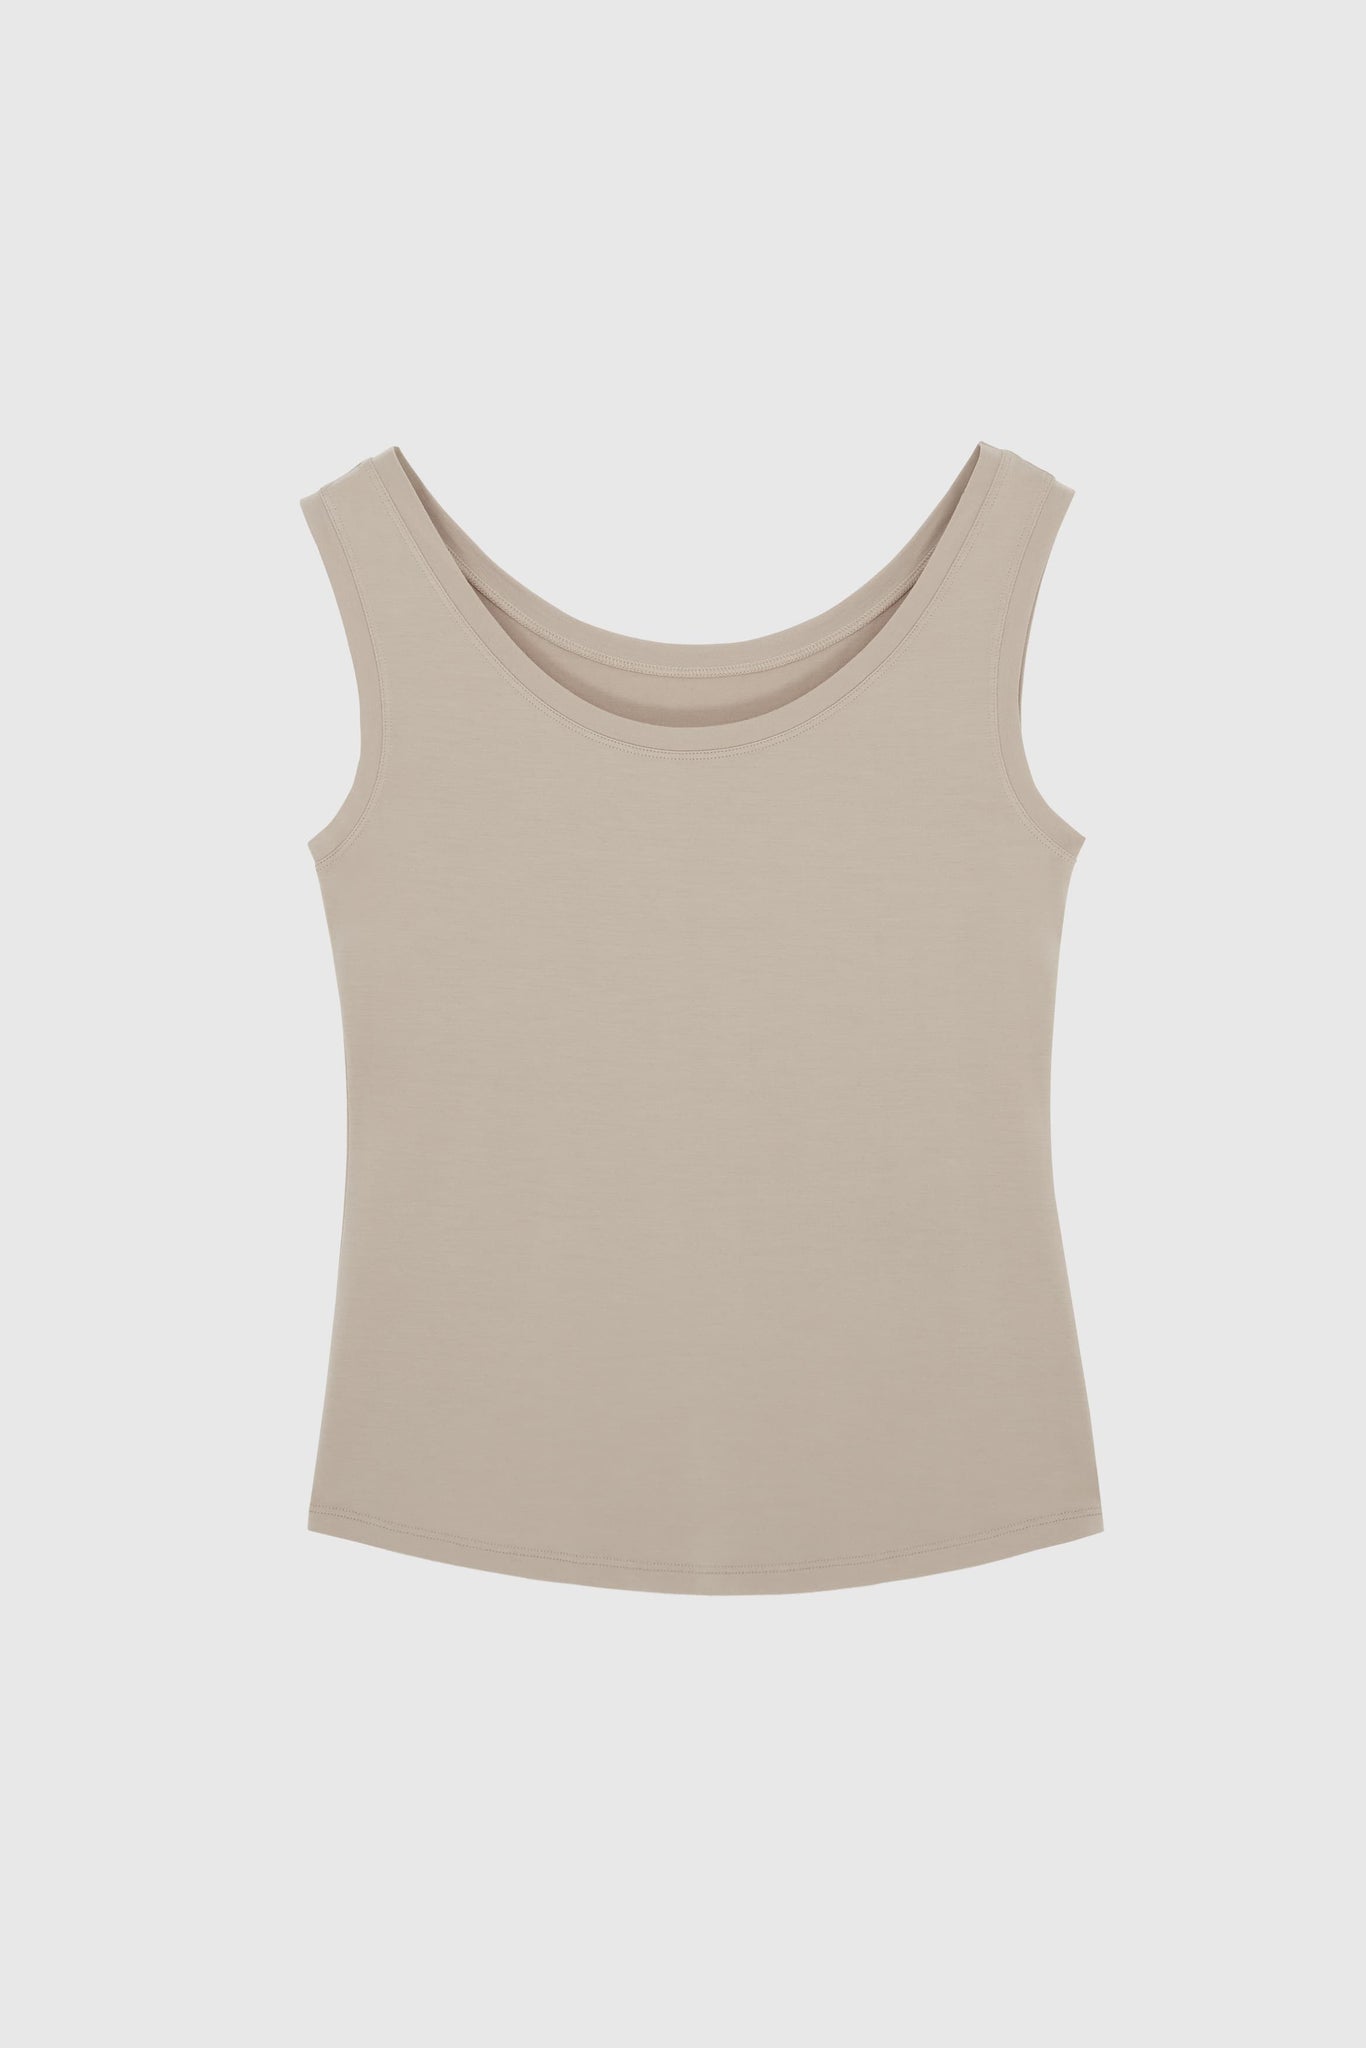 Spring Summer Heather Grey Tank Tops Women Sleeveless Round Neck Loose T Shirt  Ladies Vest Singlets